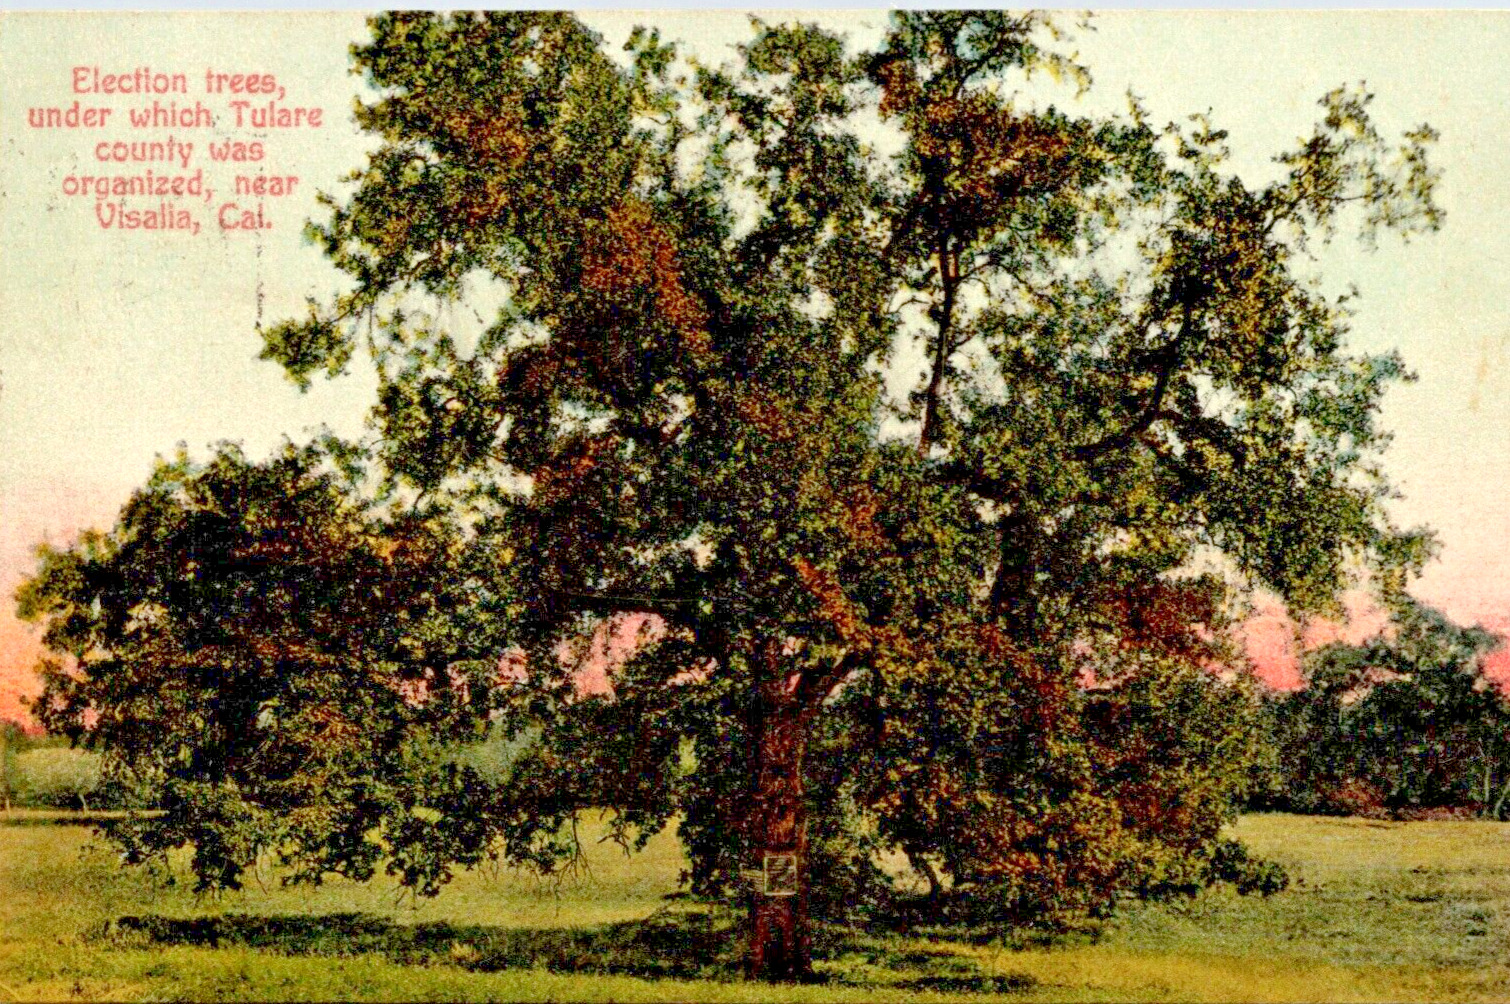 Visalia California Postcard Election Trees Tulare County 1909 UZ